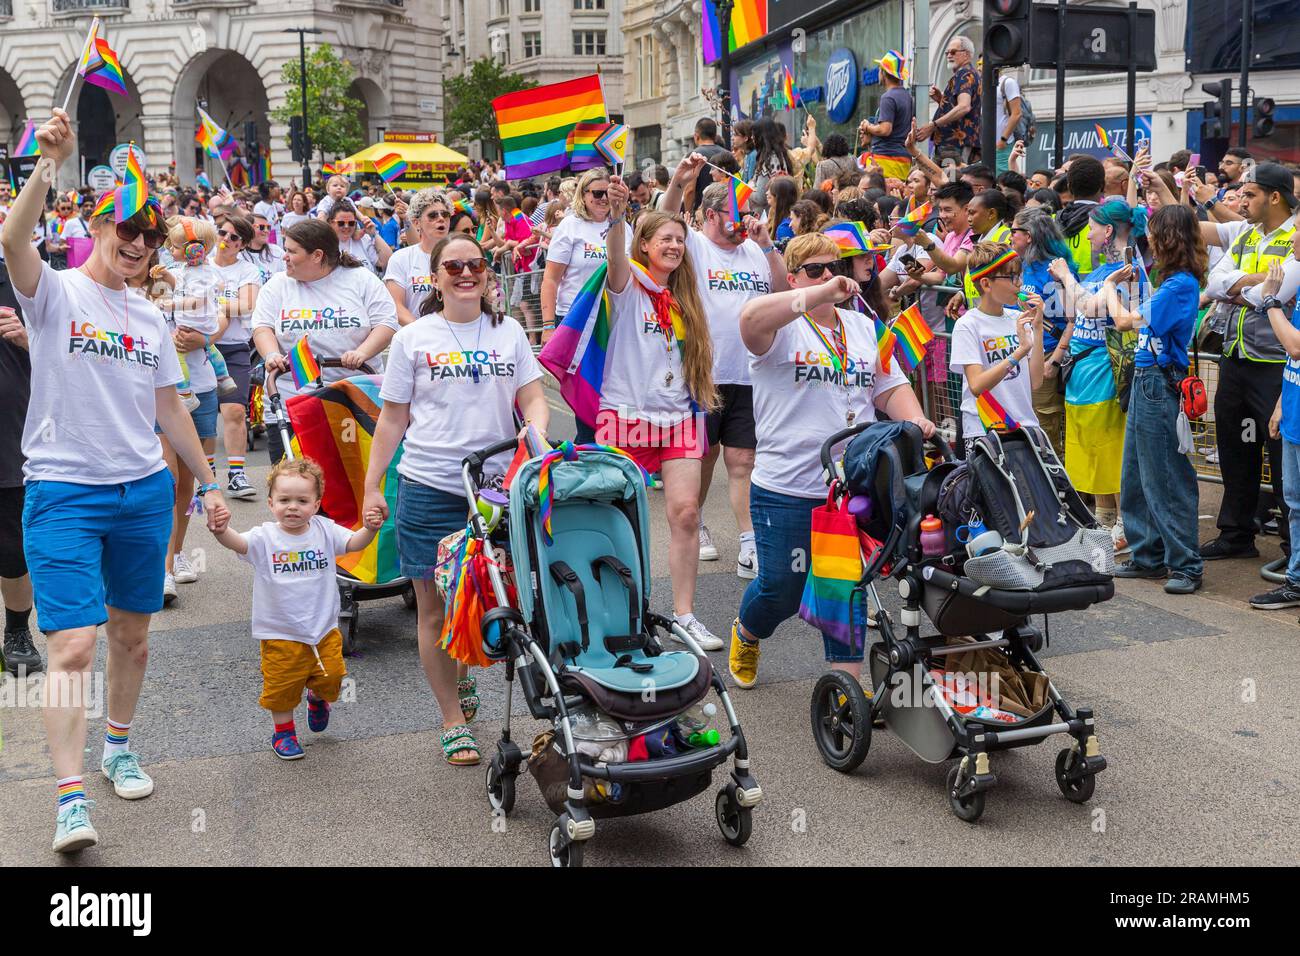 LGBT+-Familien marschieren bei Pride in London Stockfoto